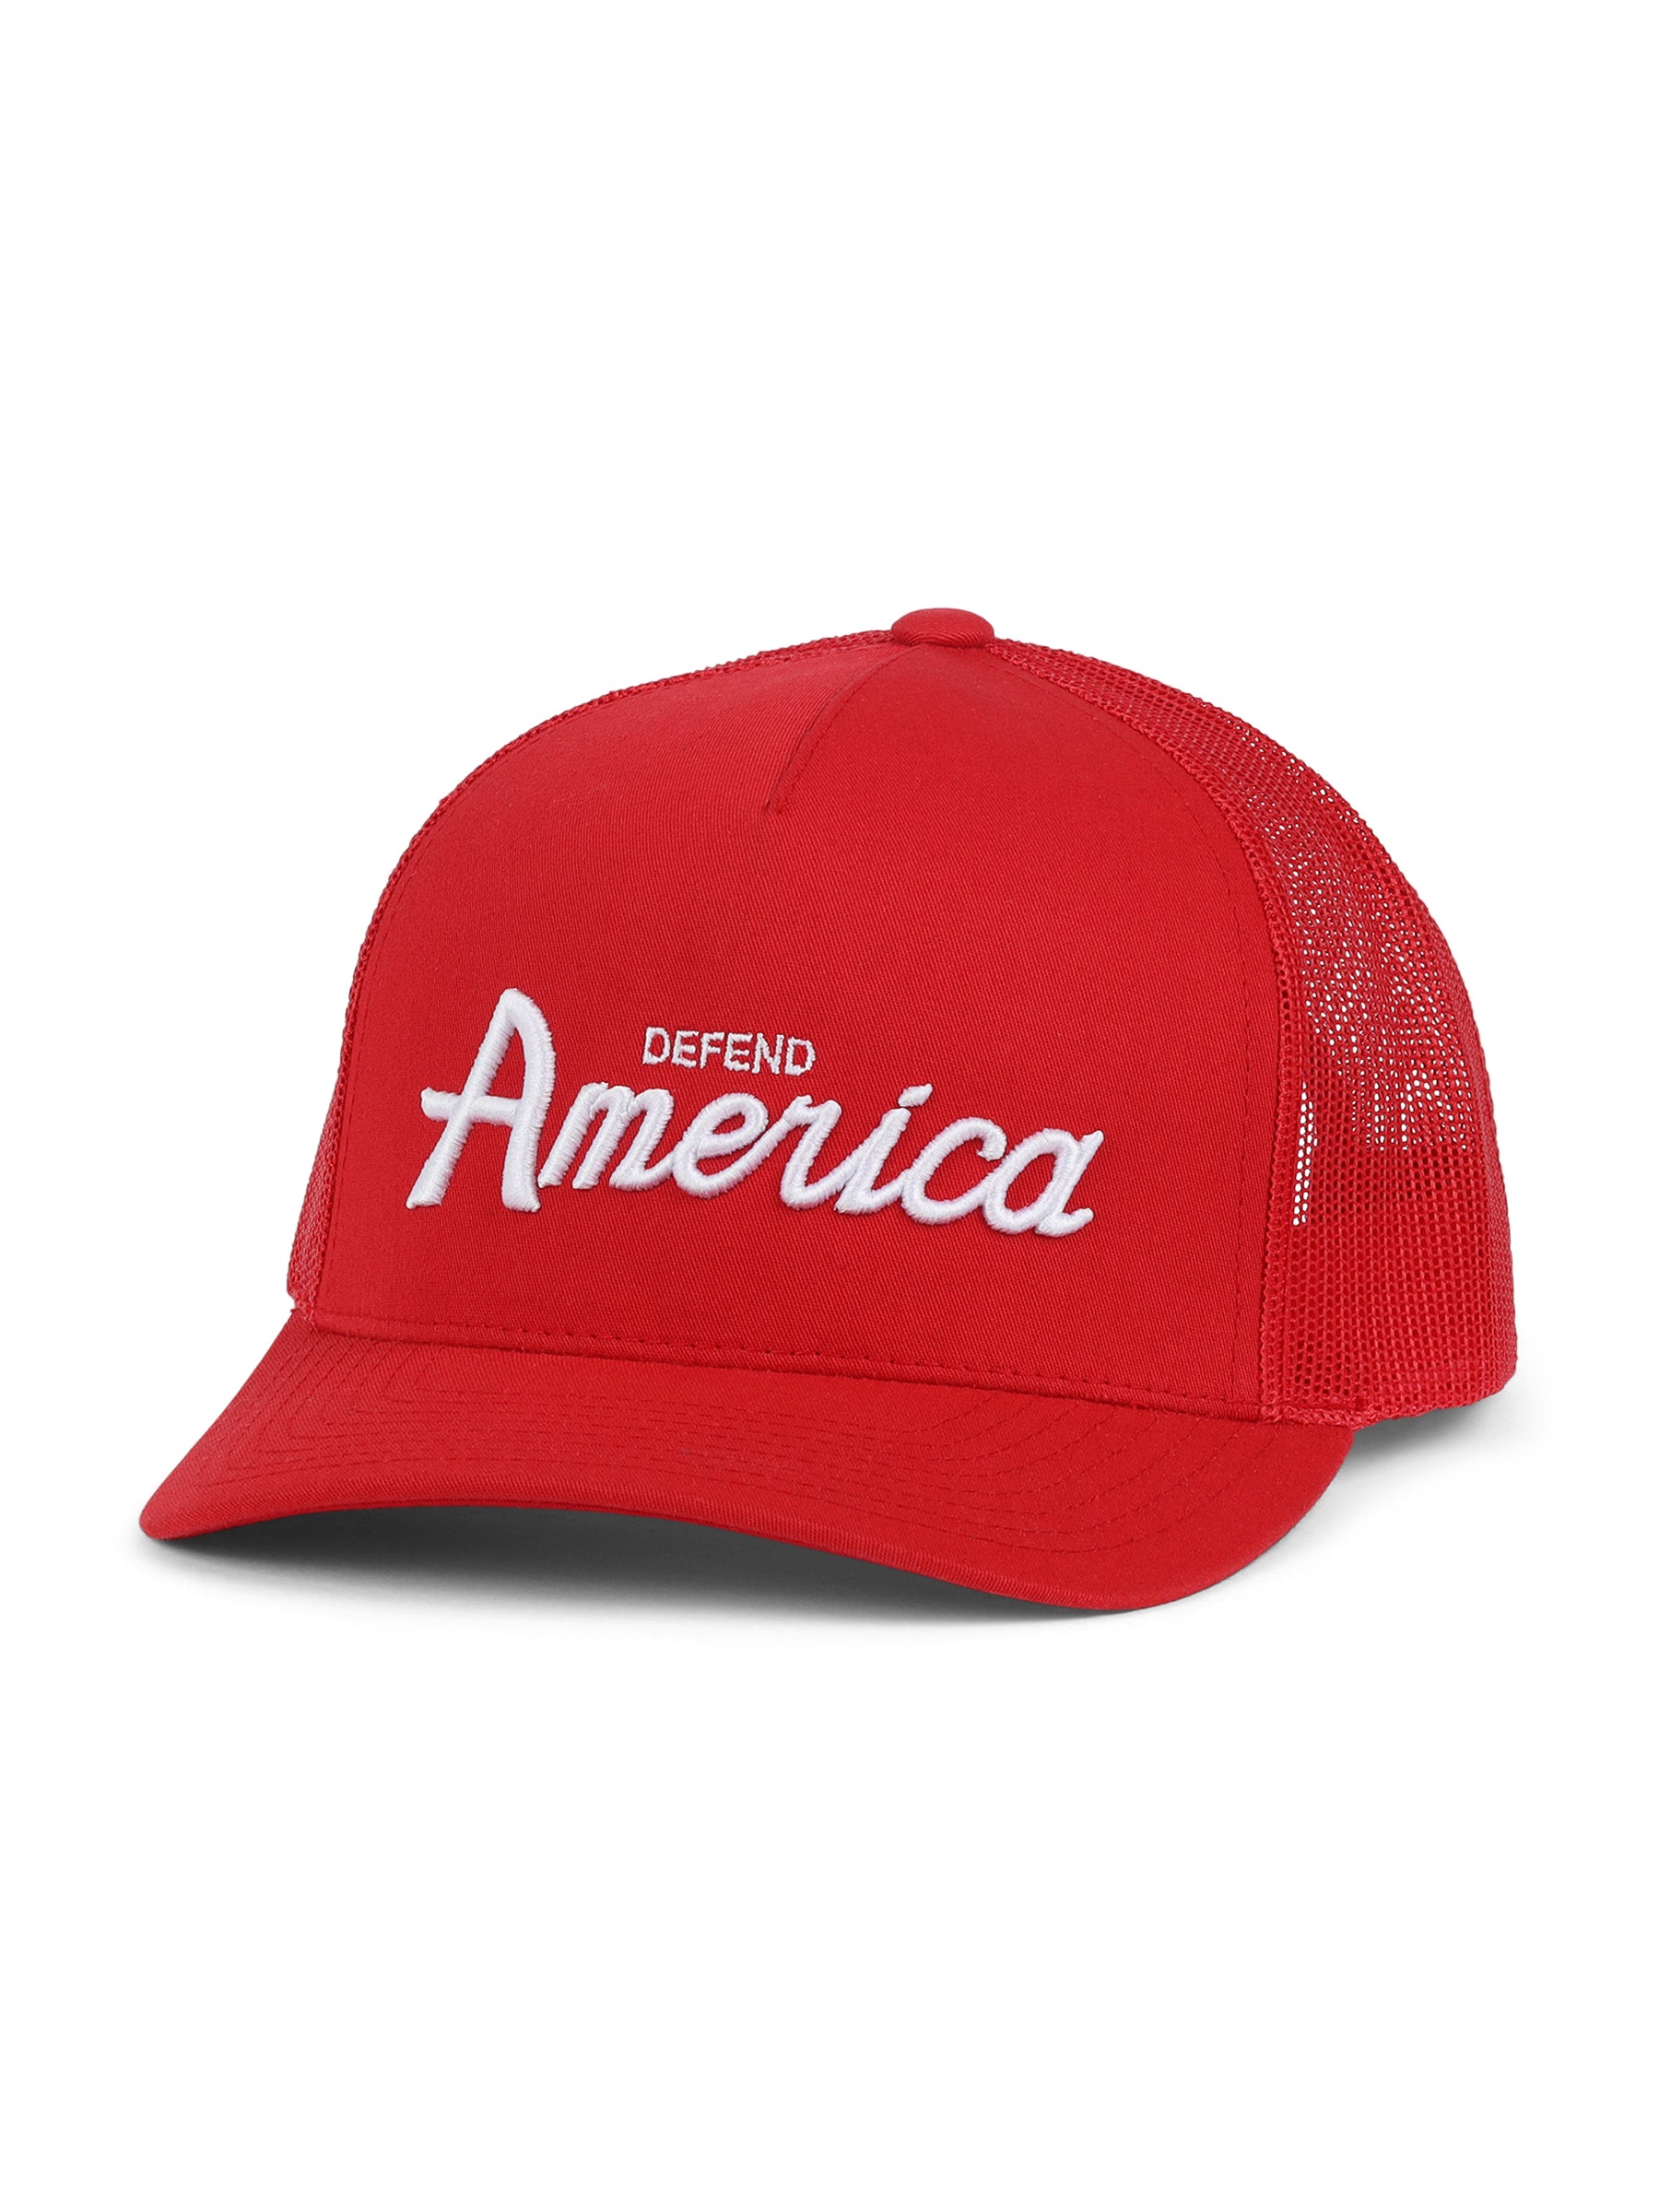 Defend America Trucker Hat